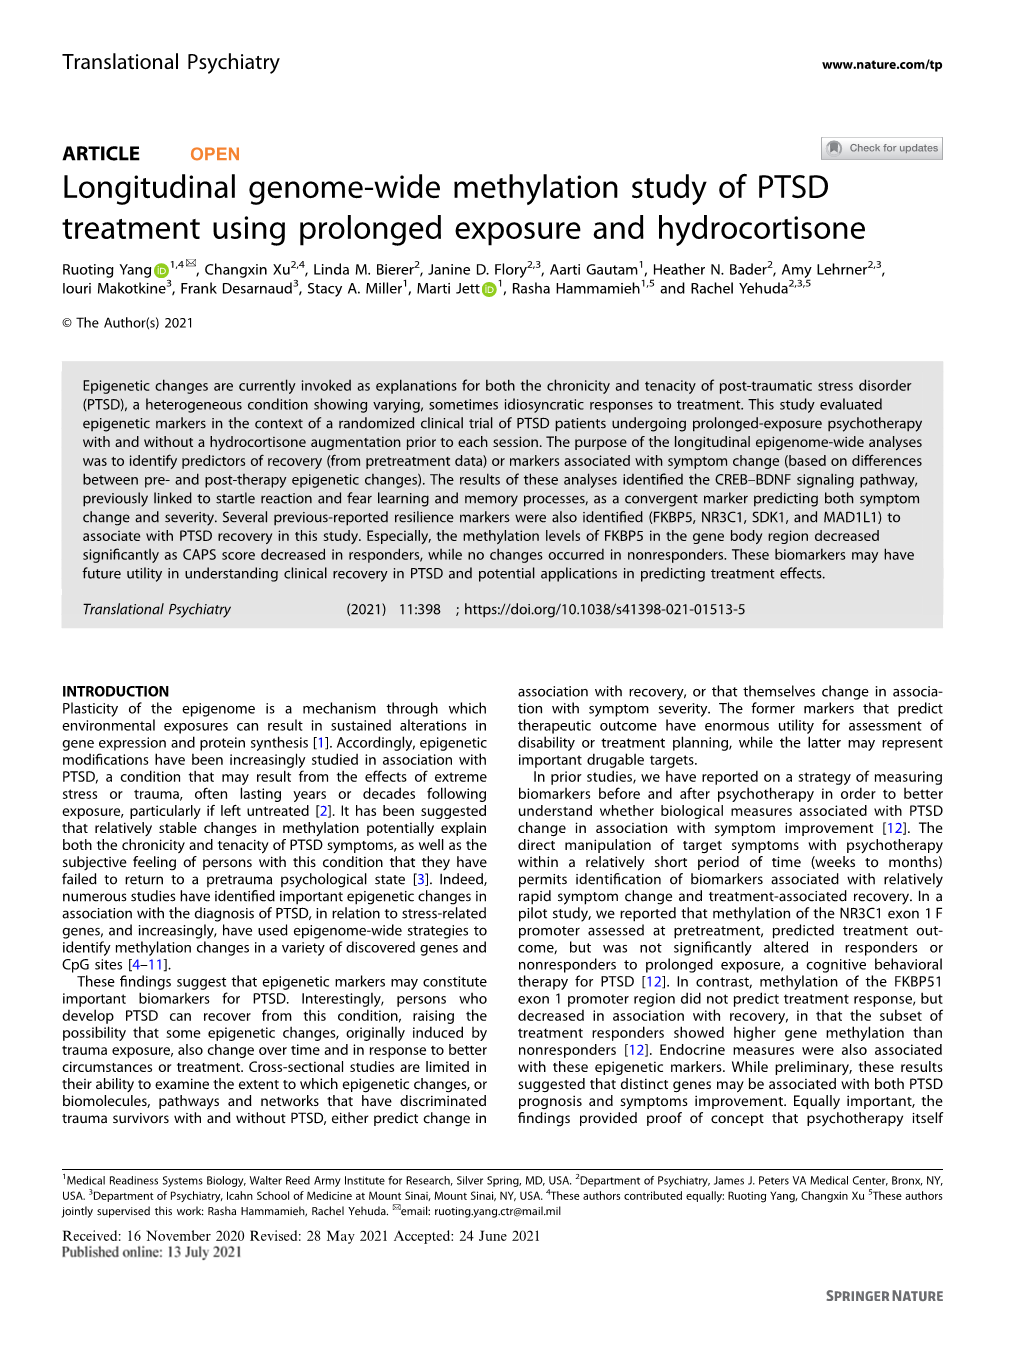 Longitudinal Genome-Wide Methylation Study of PTSD Treatment Using Prolonged Exposure and Hydrocortisone ✉ Ruoting Yang 1,4 , Changxin Xu2,4, Linda M